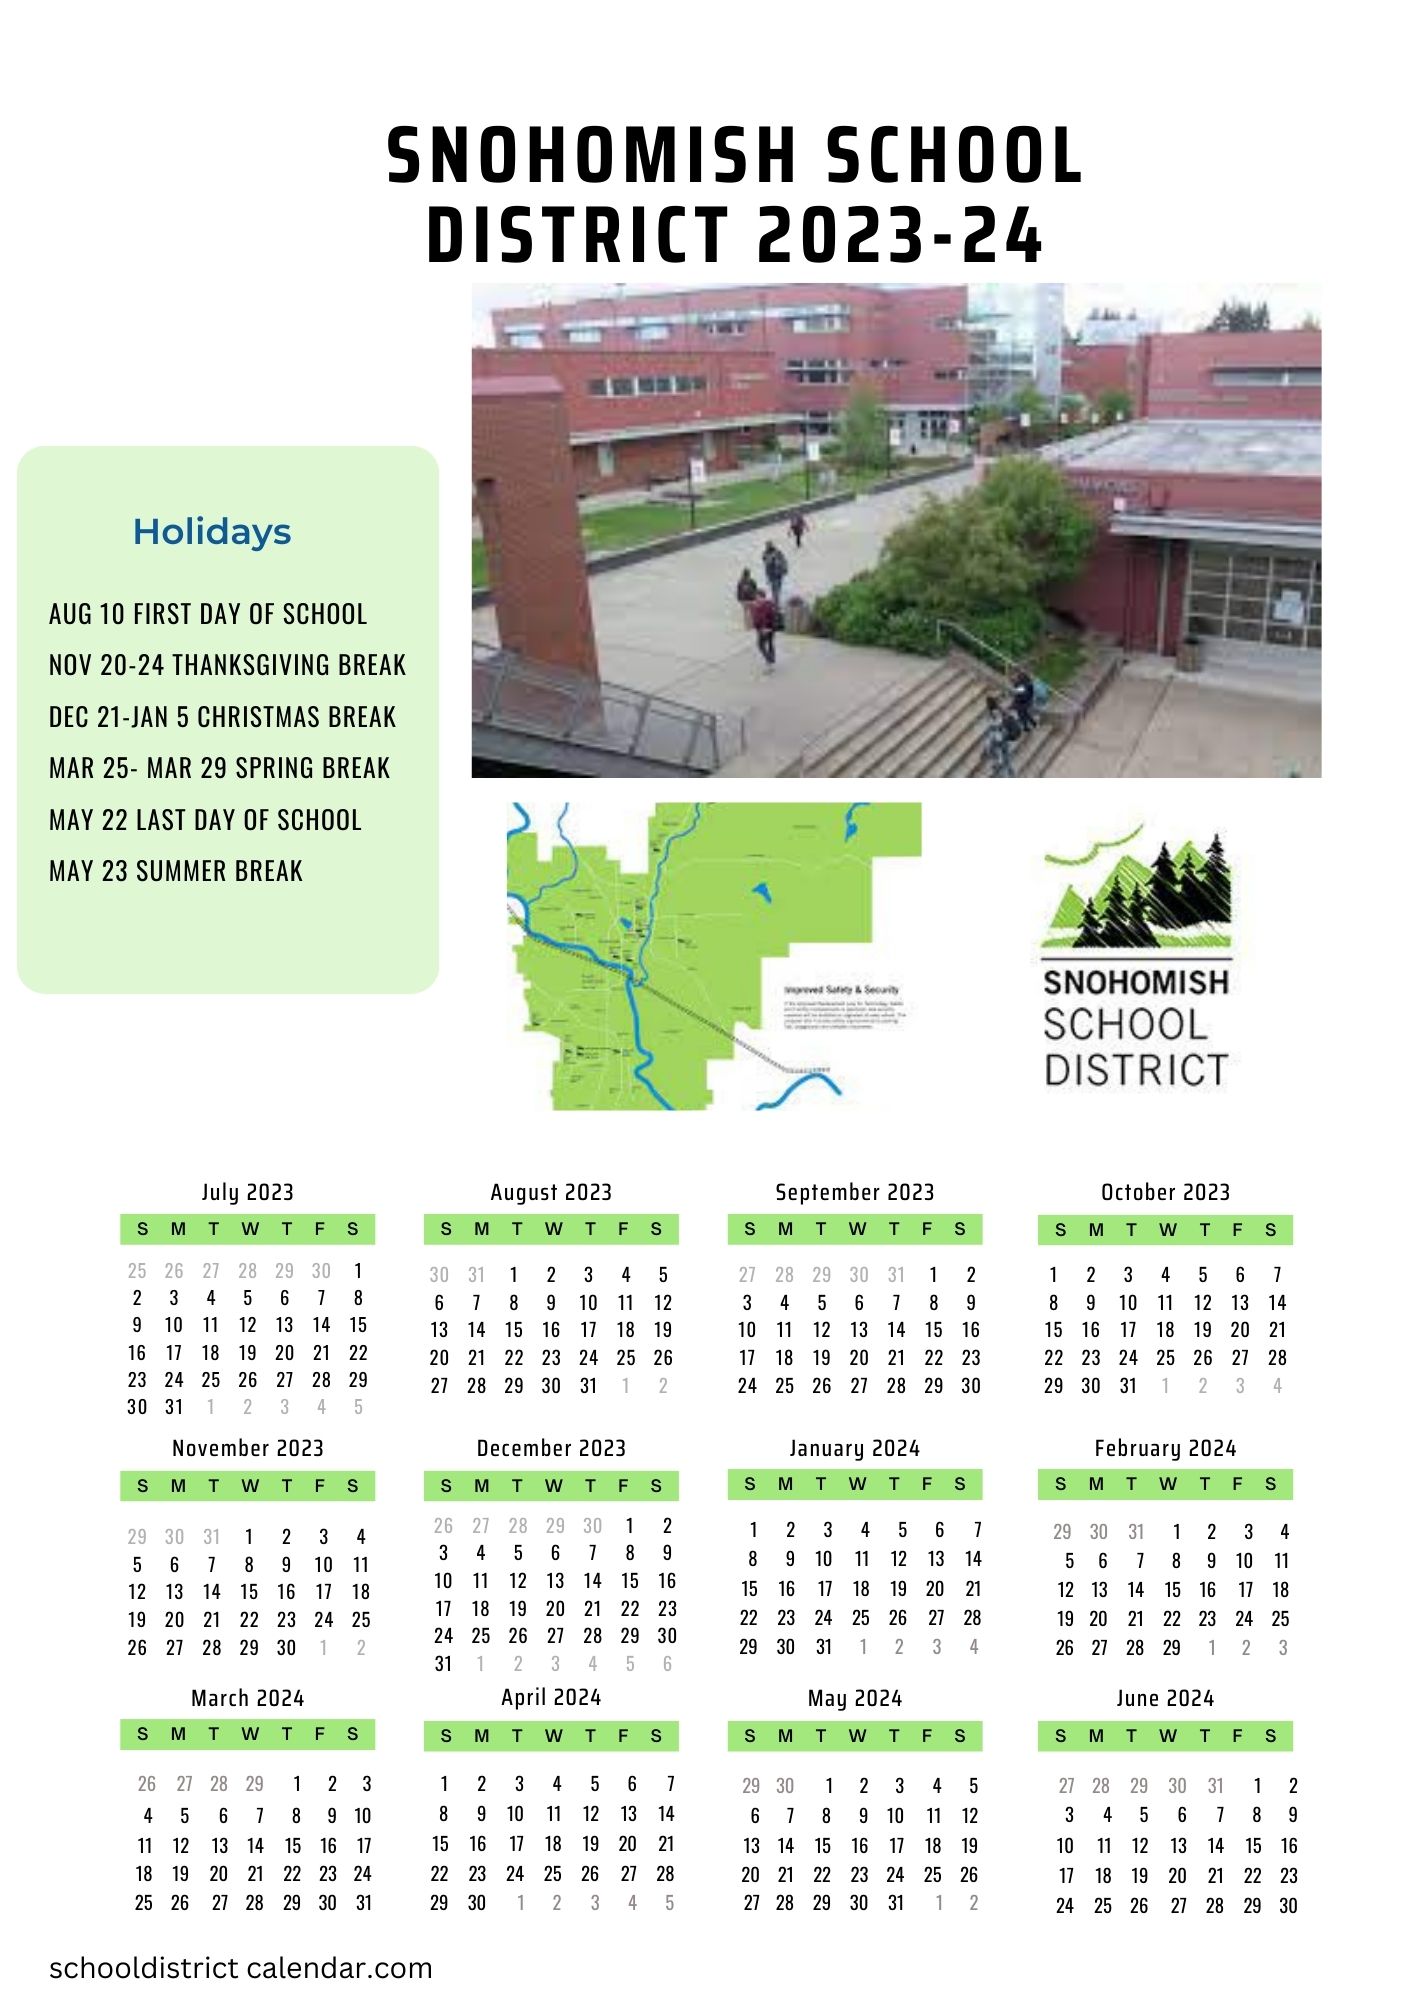 Snohomish School District Calendar Holidays 2023 2024